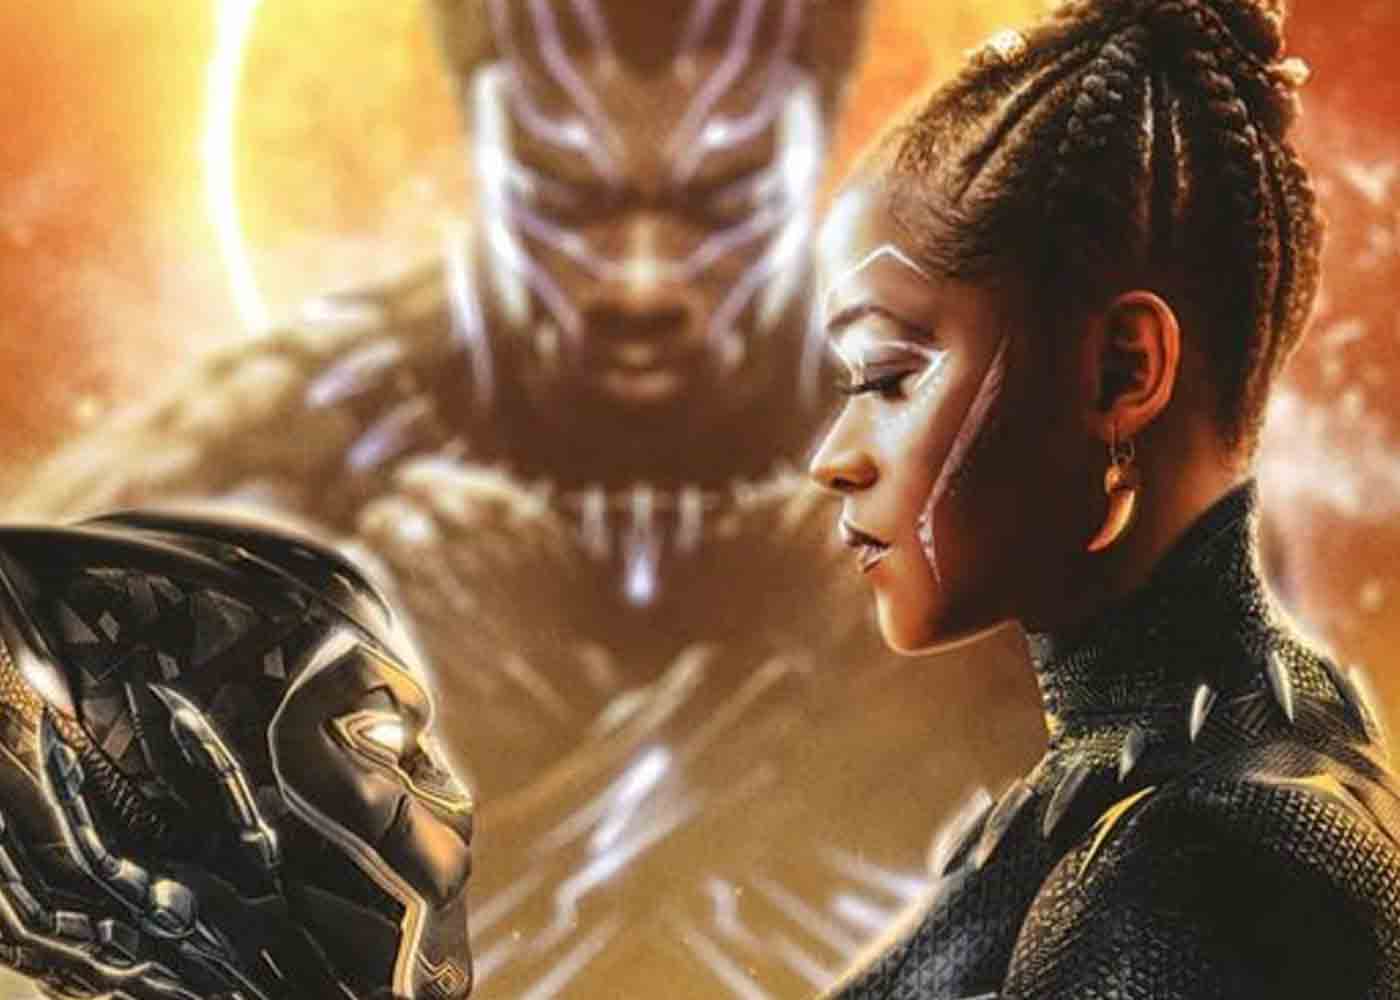 Black Panther: Wakanda Forever.